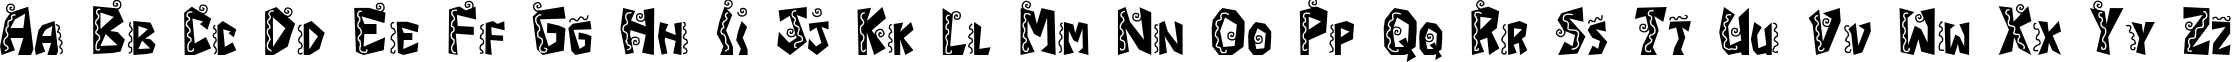 Пример написания английского алфавита шрифтом JI Chimichanga